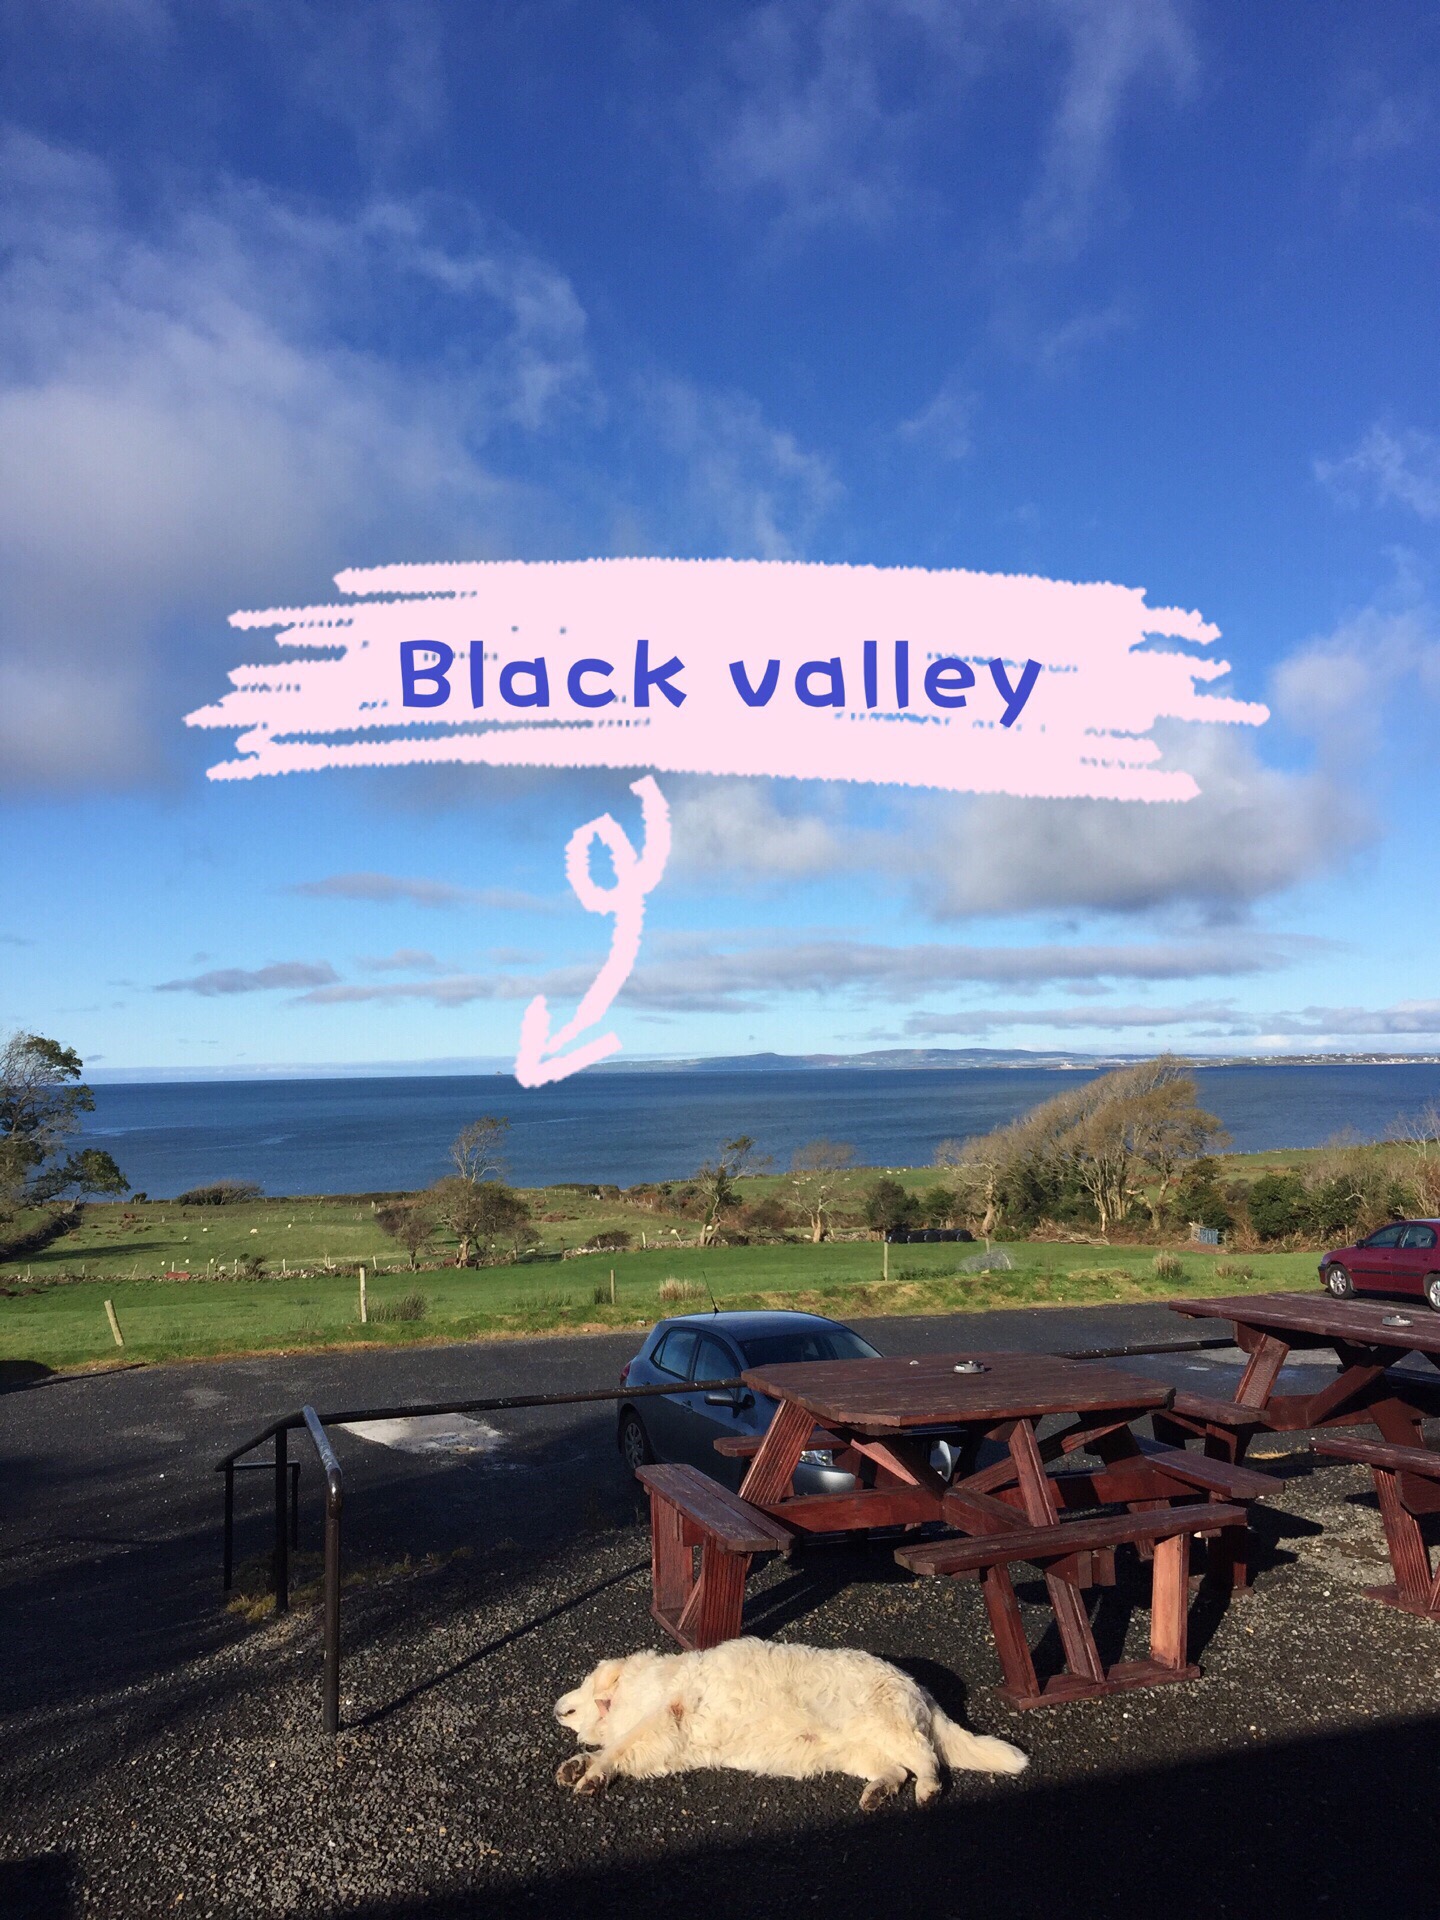 Black valley 旅行网站上都找不到的地方。在爱尔兰基拉尼小镇二十几公里的地方。 这个人迹罕